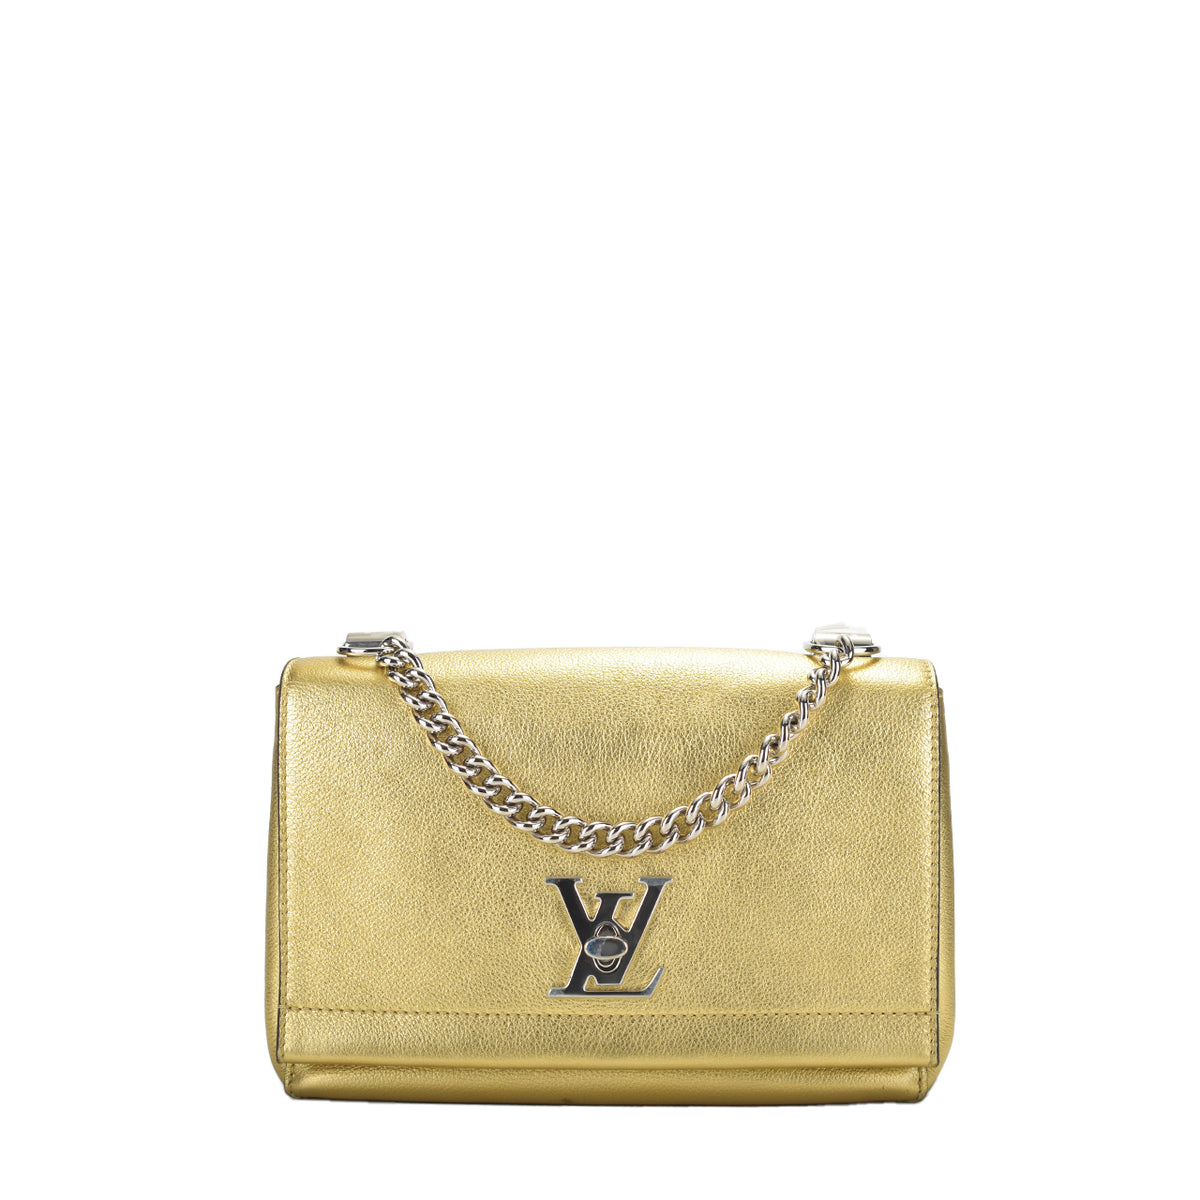 Buy Louis Vuitton LOUISVUITTON Size:- GI0634 Pizza Box Monogram